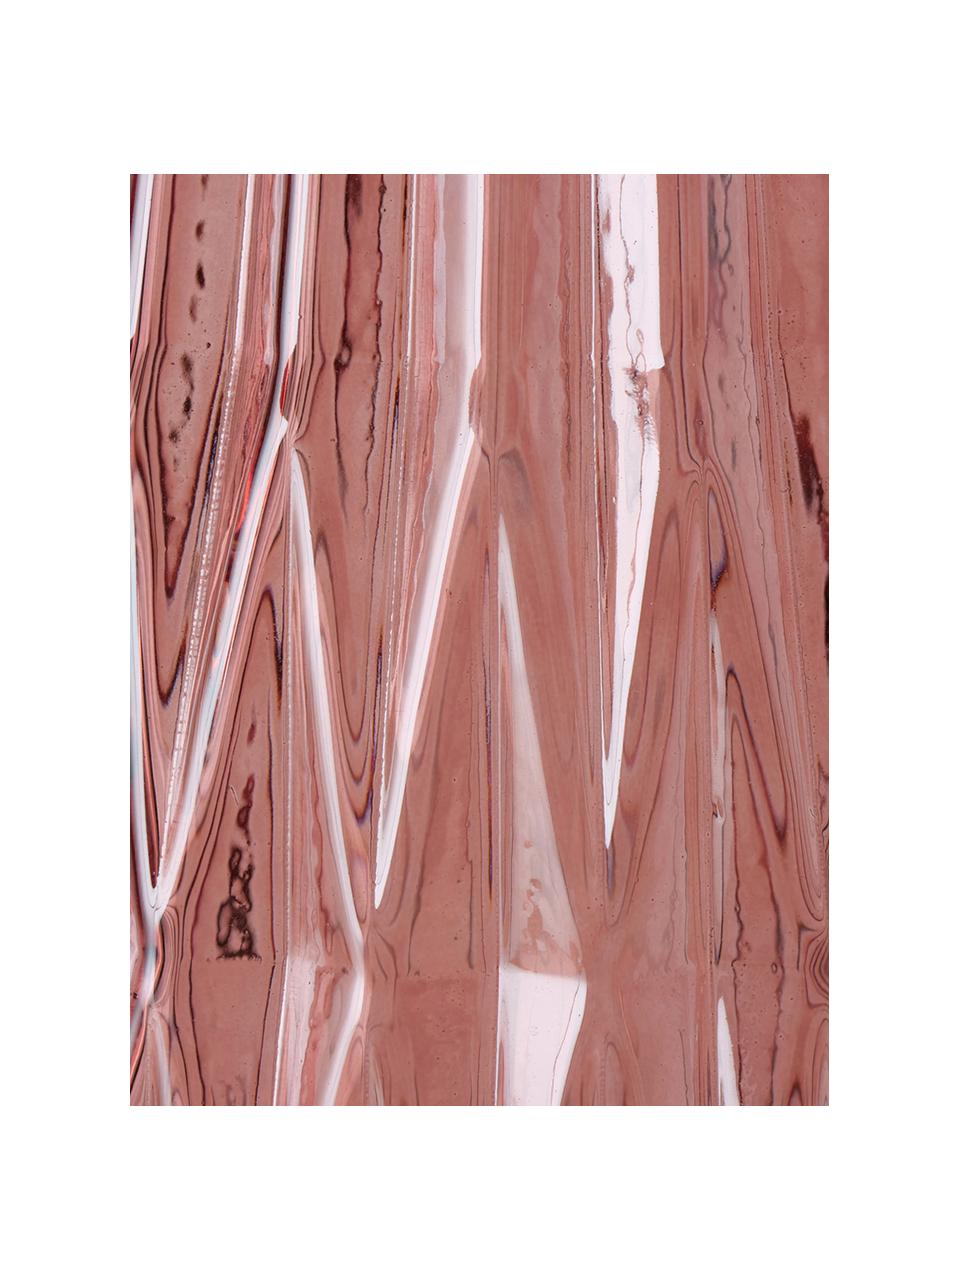 Grote glazen vaas Rubina, Glas, Roze, Ø 20 cm, H 36 cm